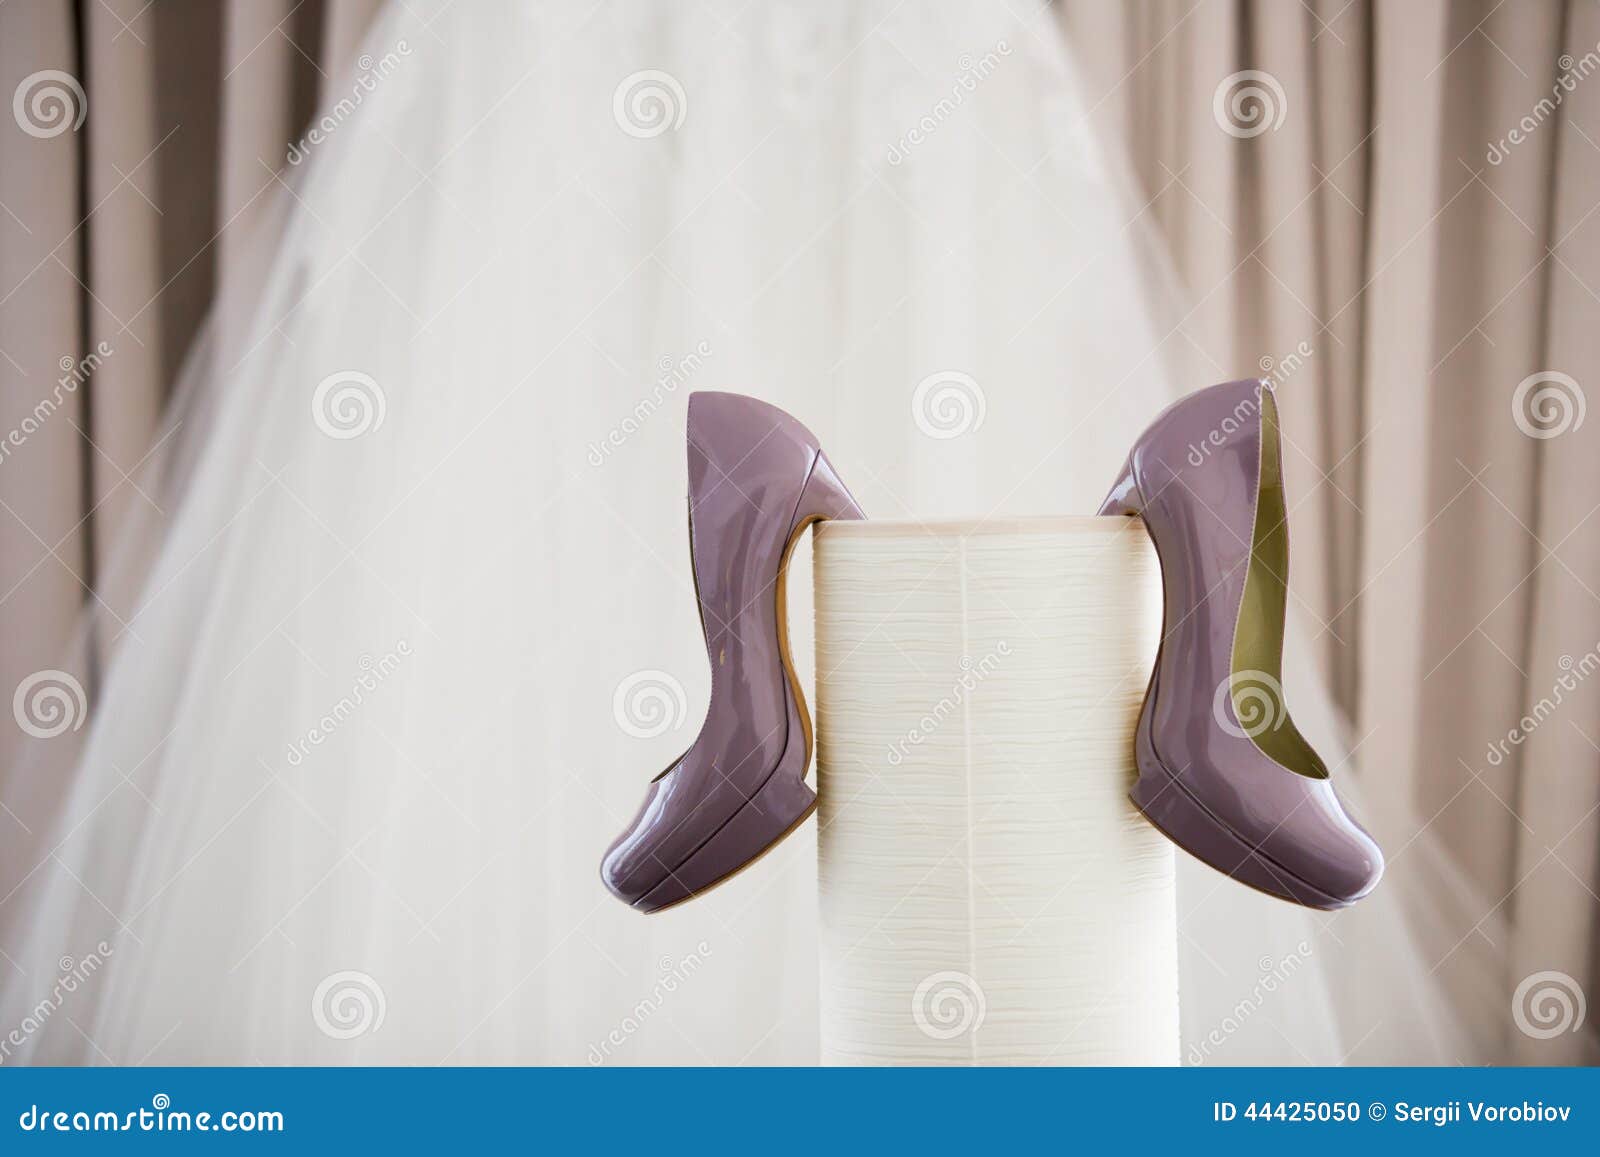 Beautiful bridal shoes stock photo. Image of white, bride - 44425050